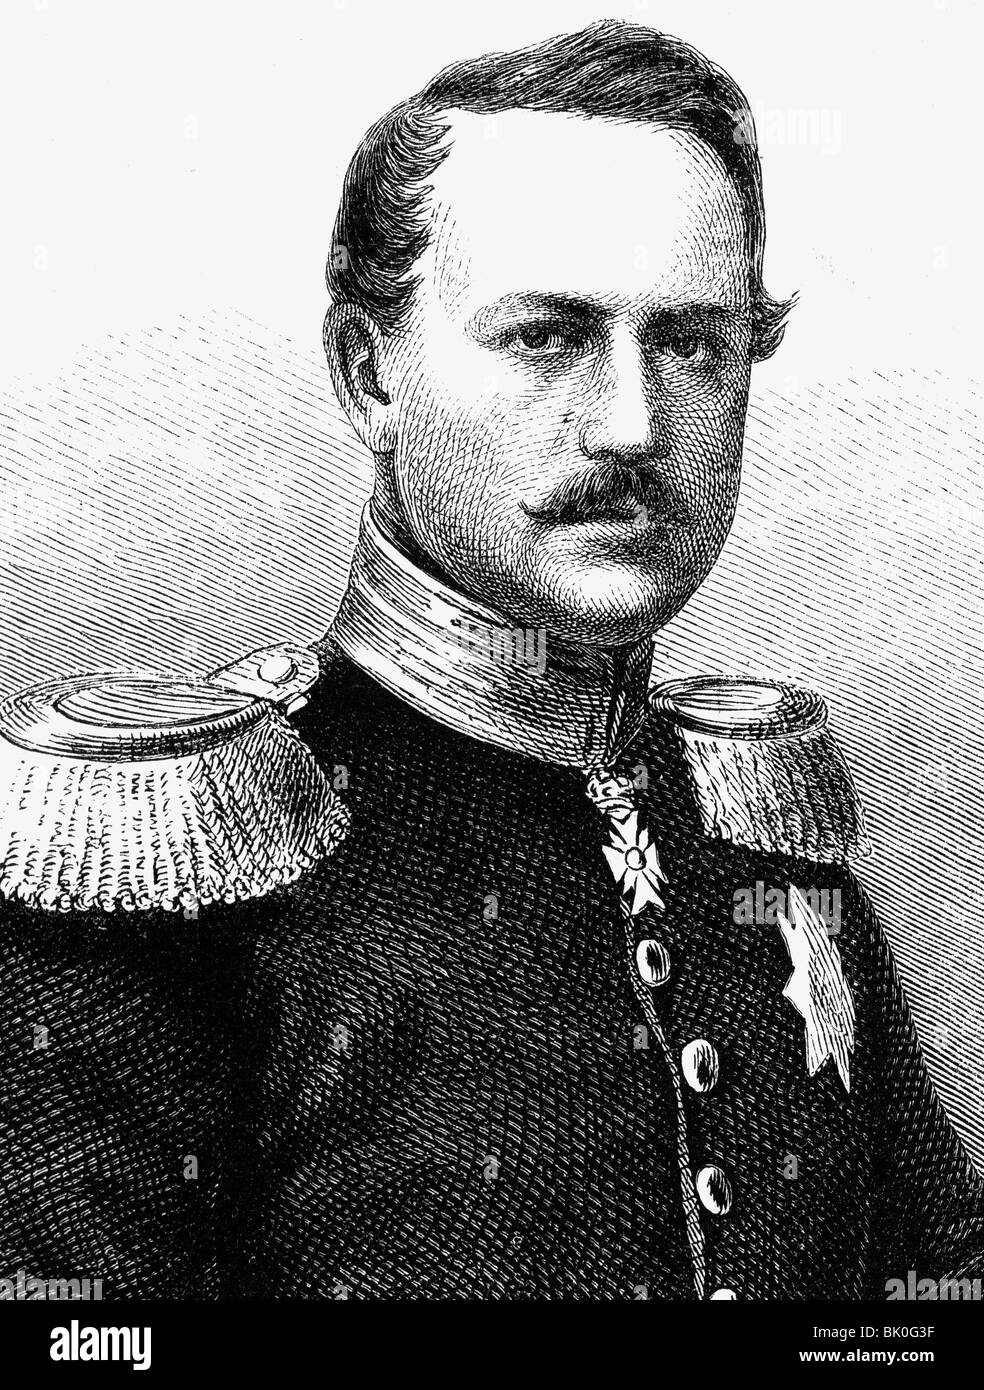 Frederick William I, 20.8.1802 - 6.1.1875, Elector of Hesse-Kassel 20.11.1847 - 26.7.1866, portrait, wood engraving, 19th century, , Stock Photo